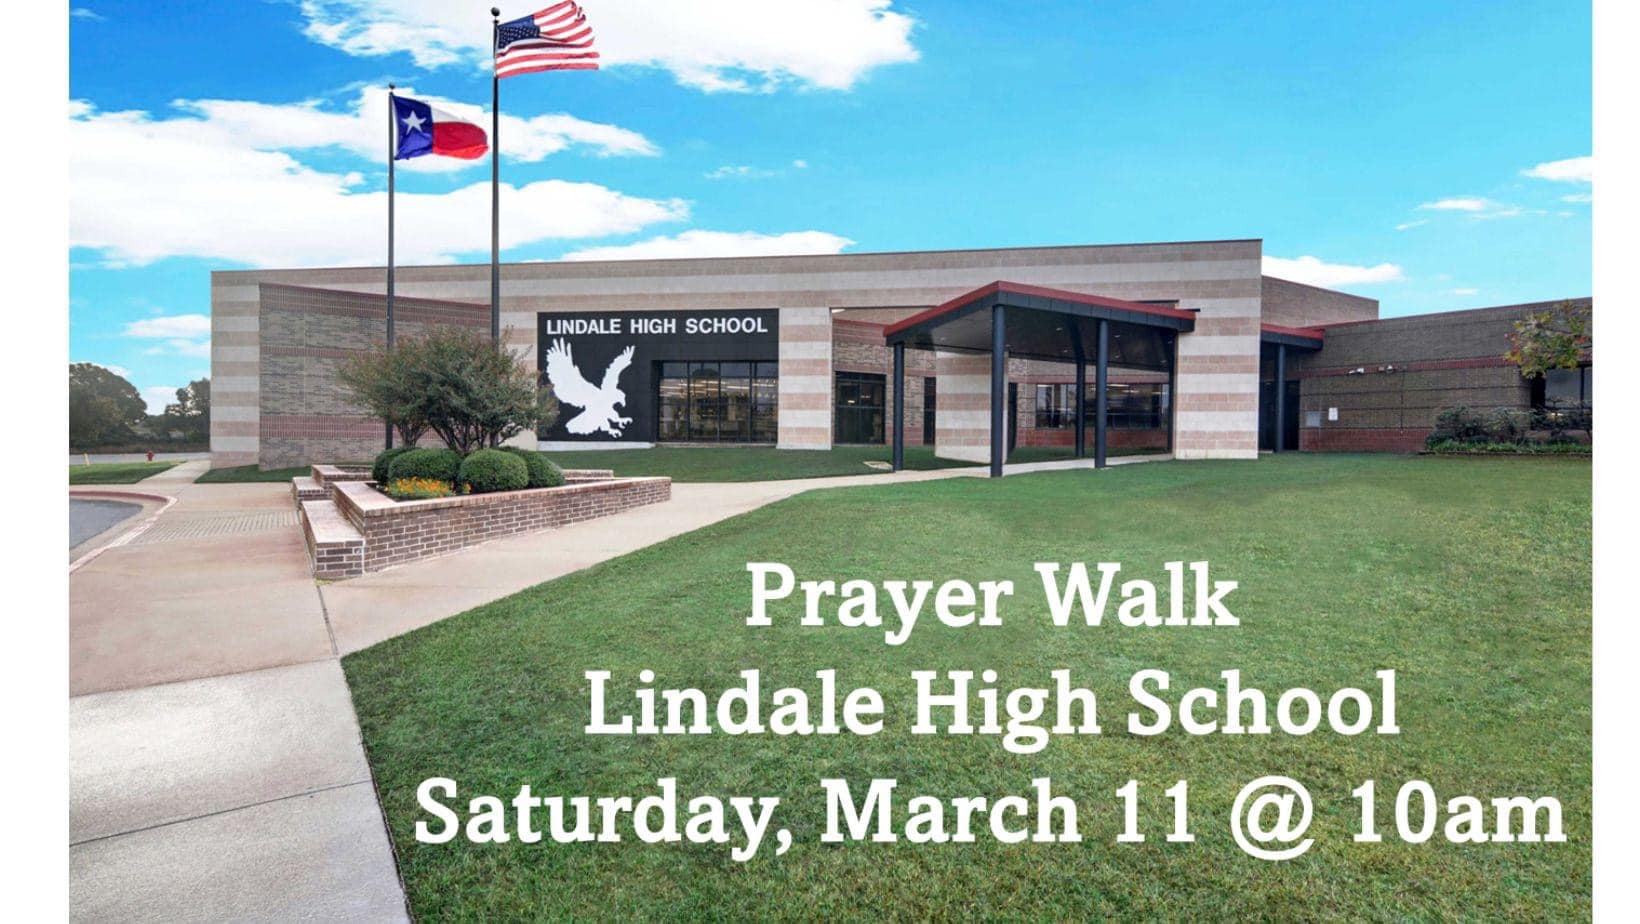 lindale high school prayer walk announcement saturday march 11 at 10:00am